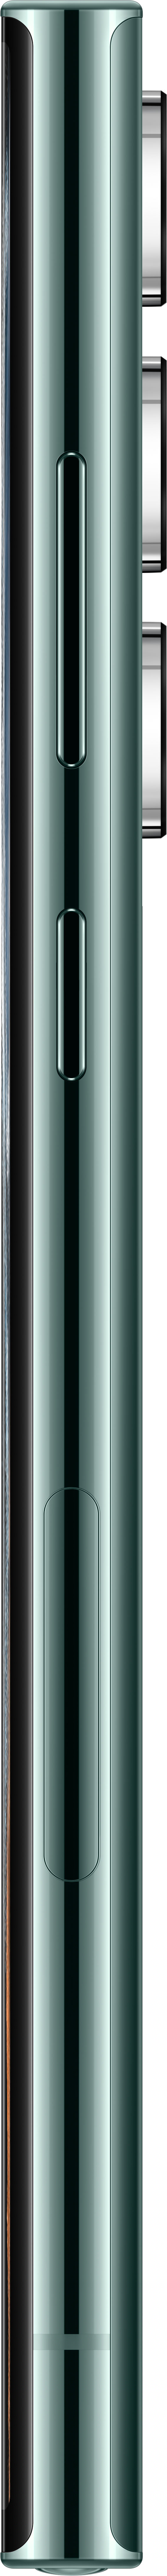 Best Buy: Samsung Galaxy S22 Ultra 512GB Burgundy (Verizon) SM